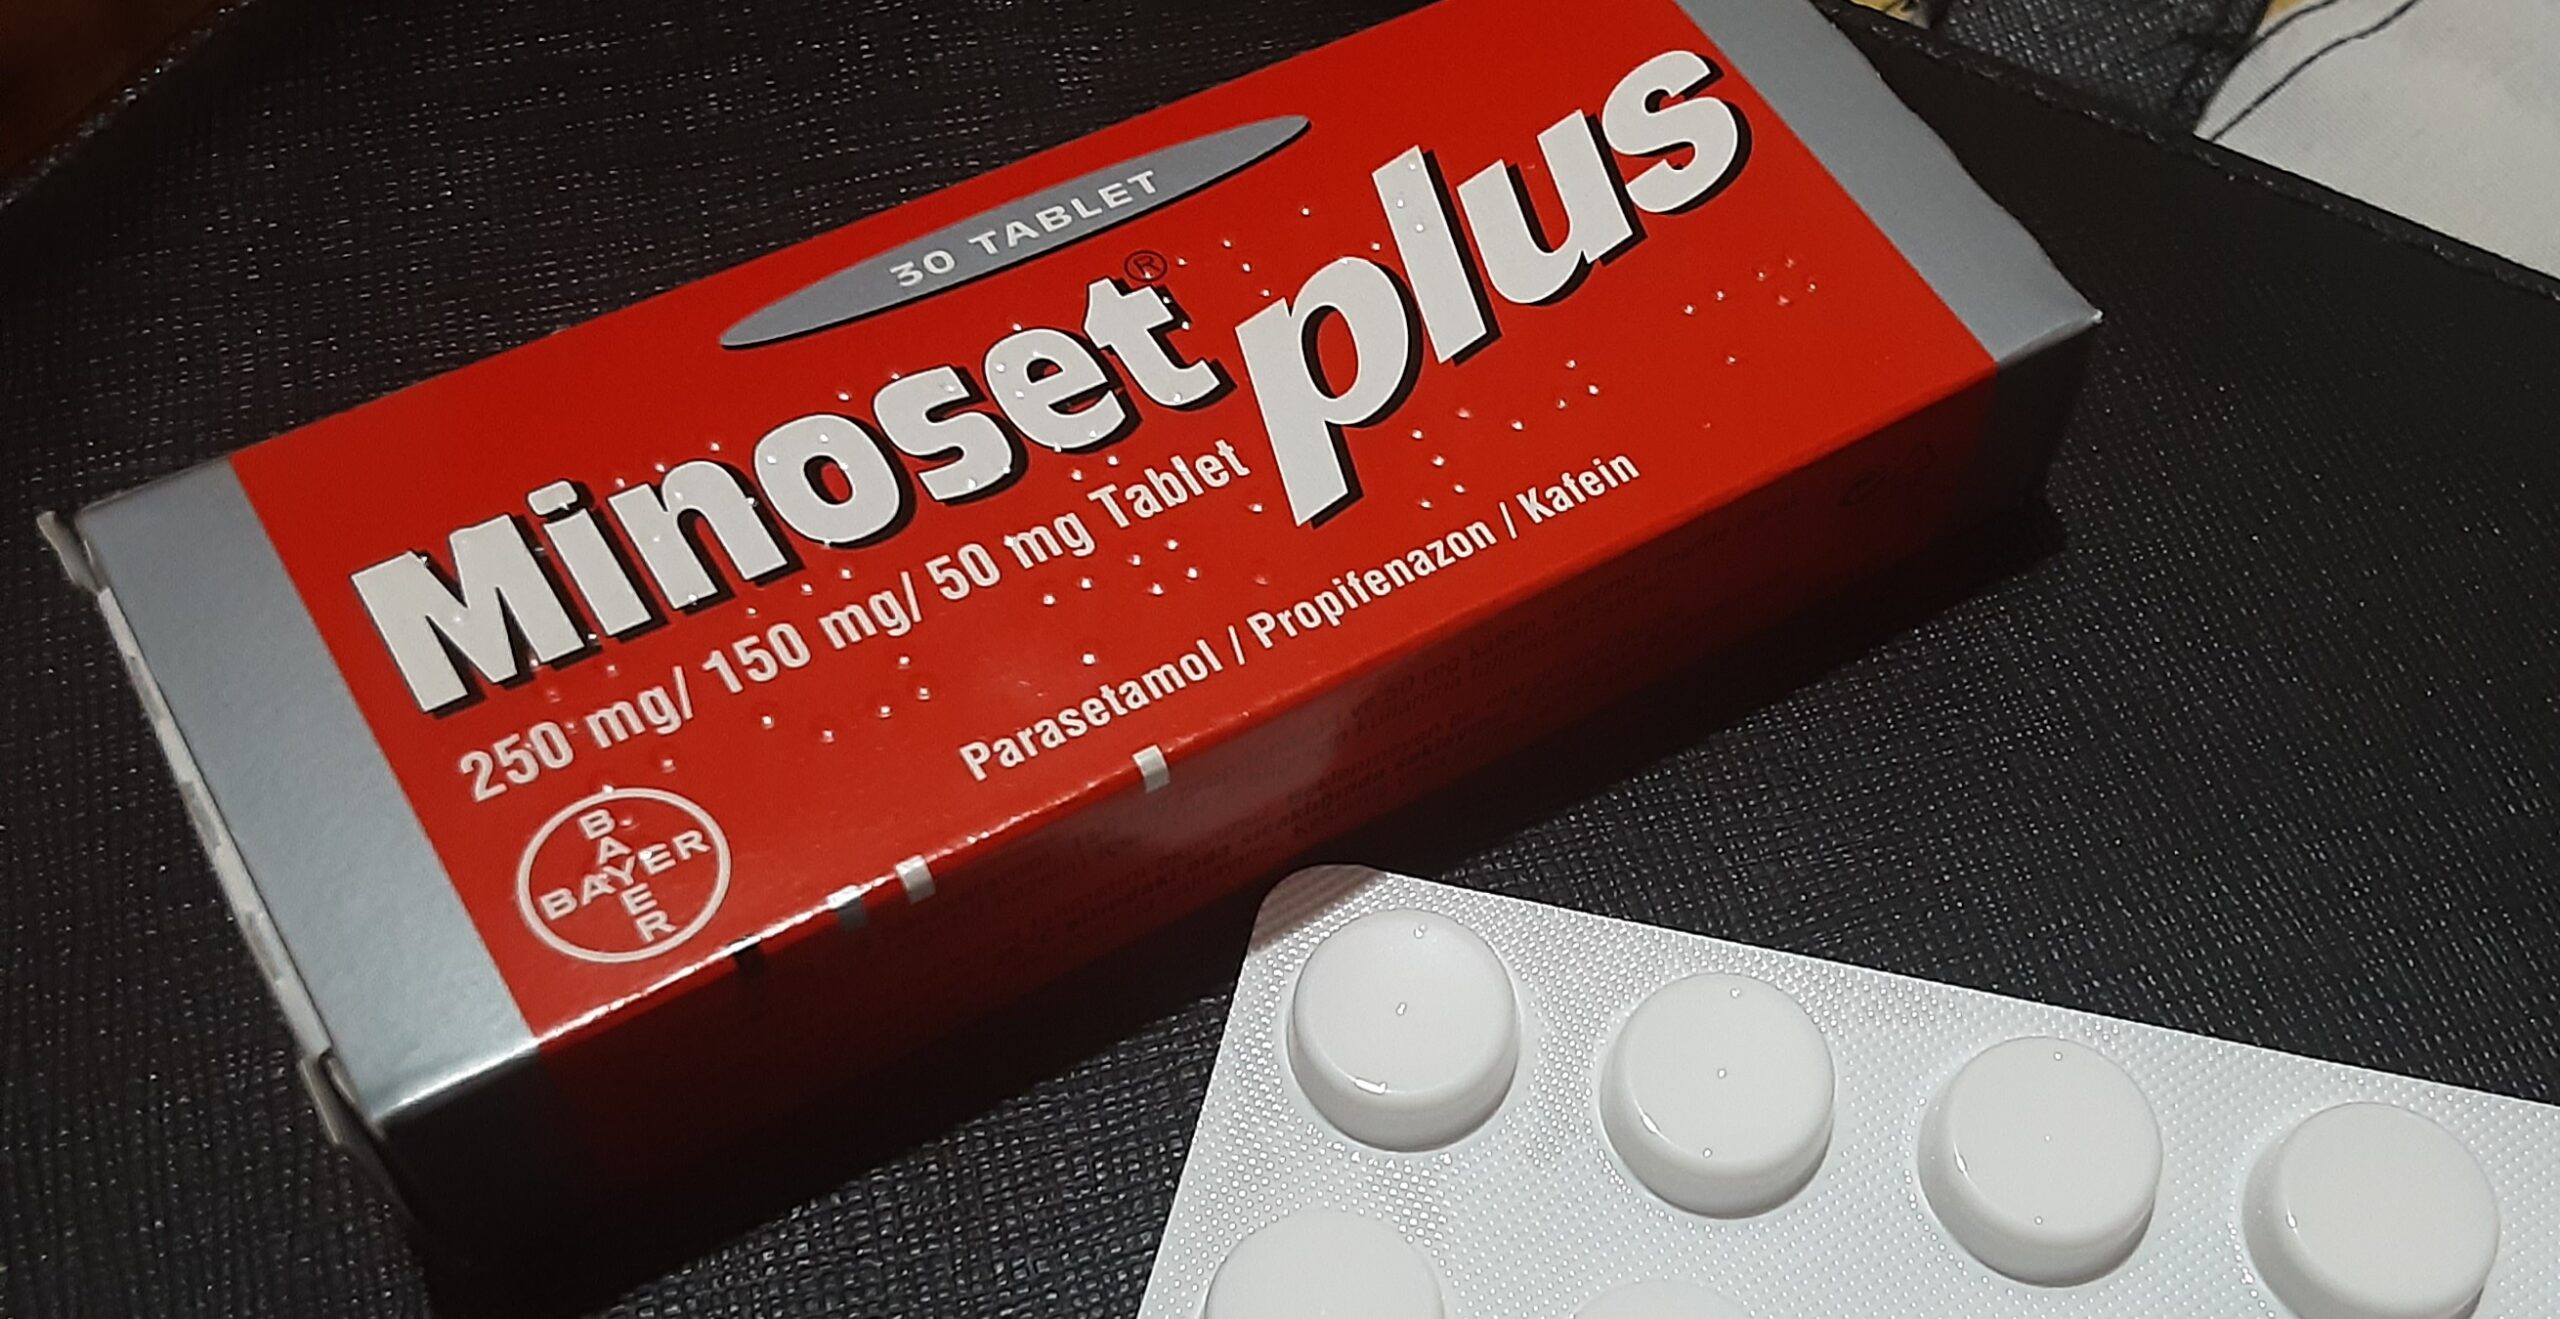 Minoset Plus Ne İşe Yarar | Minoset 250 mg/150 mg/50 mg Nedir Nasıl Kullanılır?